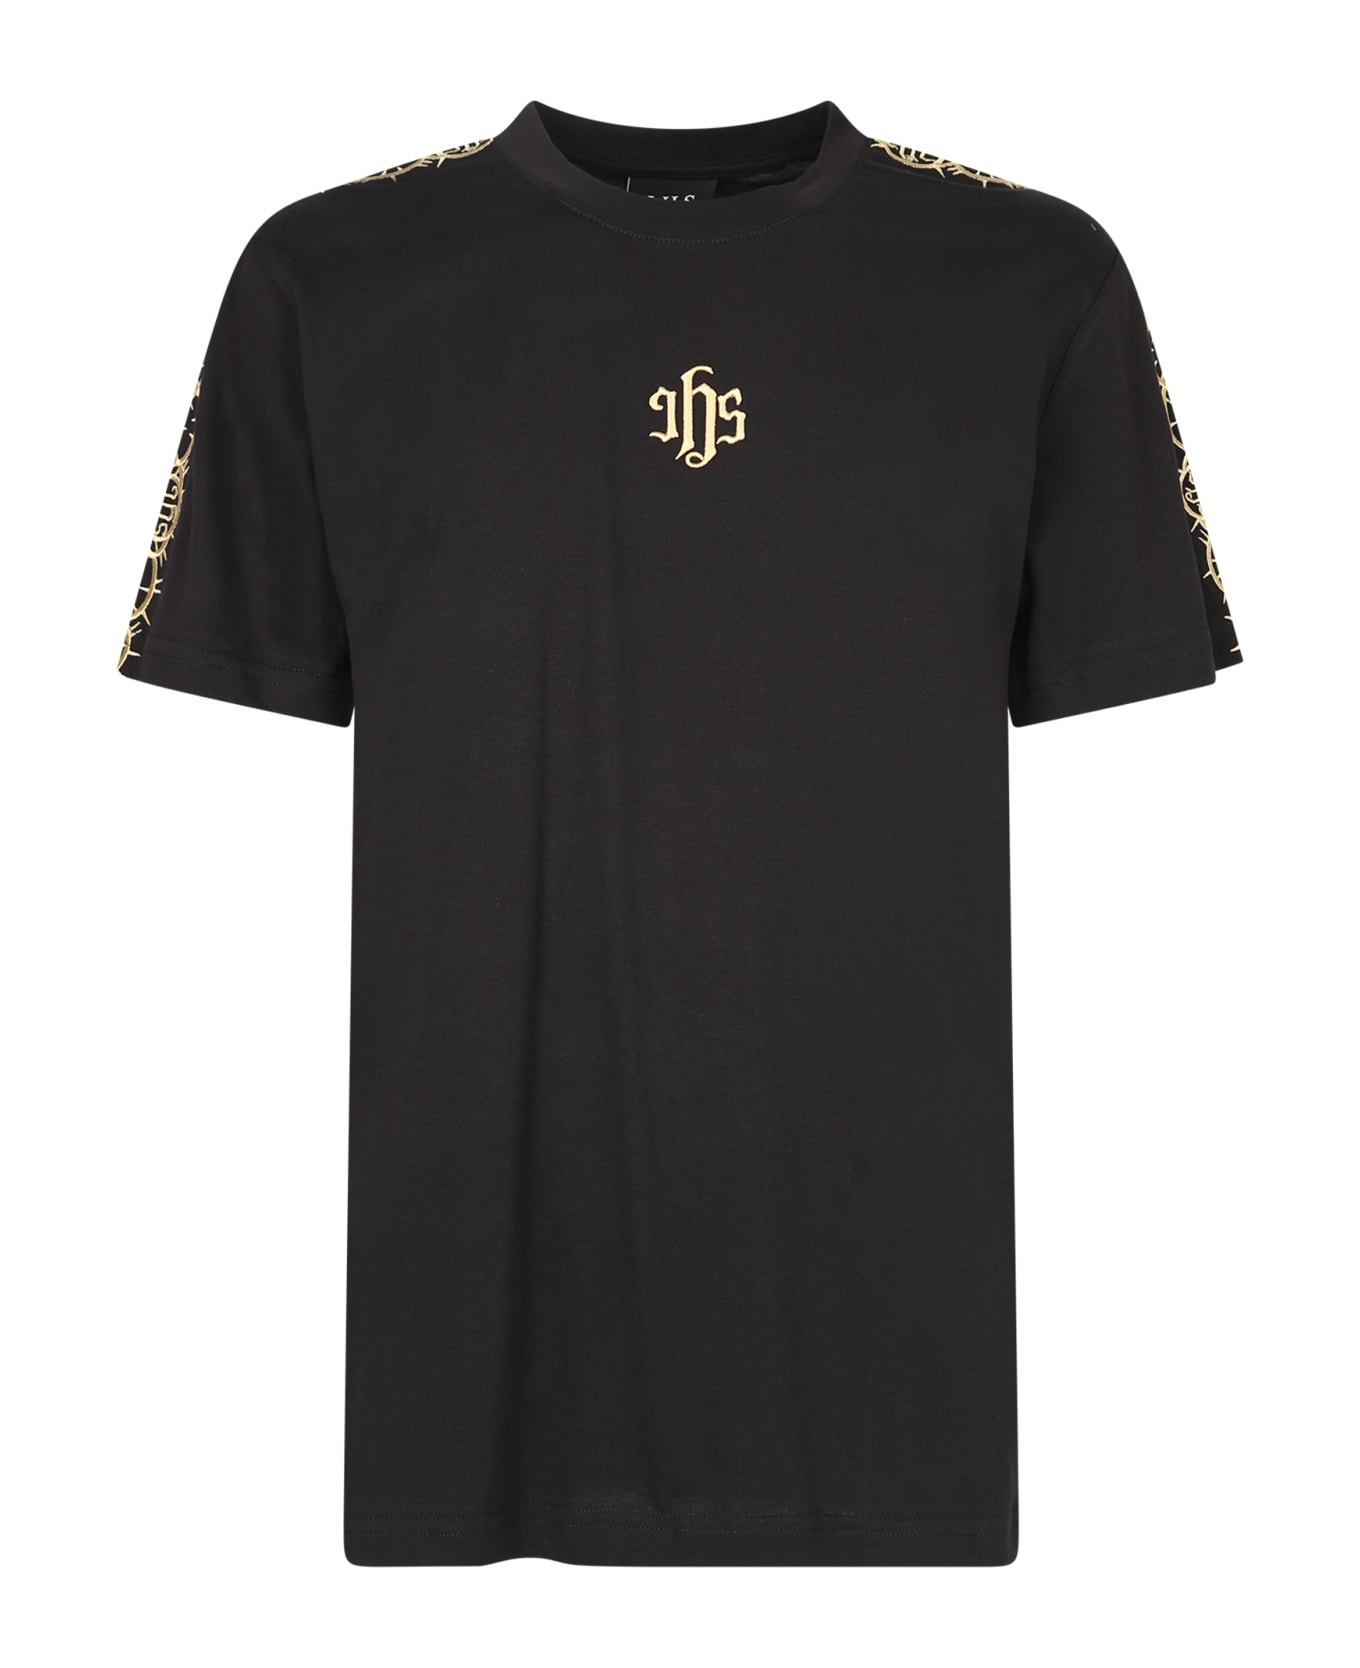 Ihs Branded T-shirt - Black